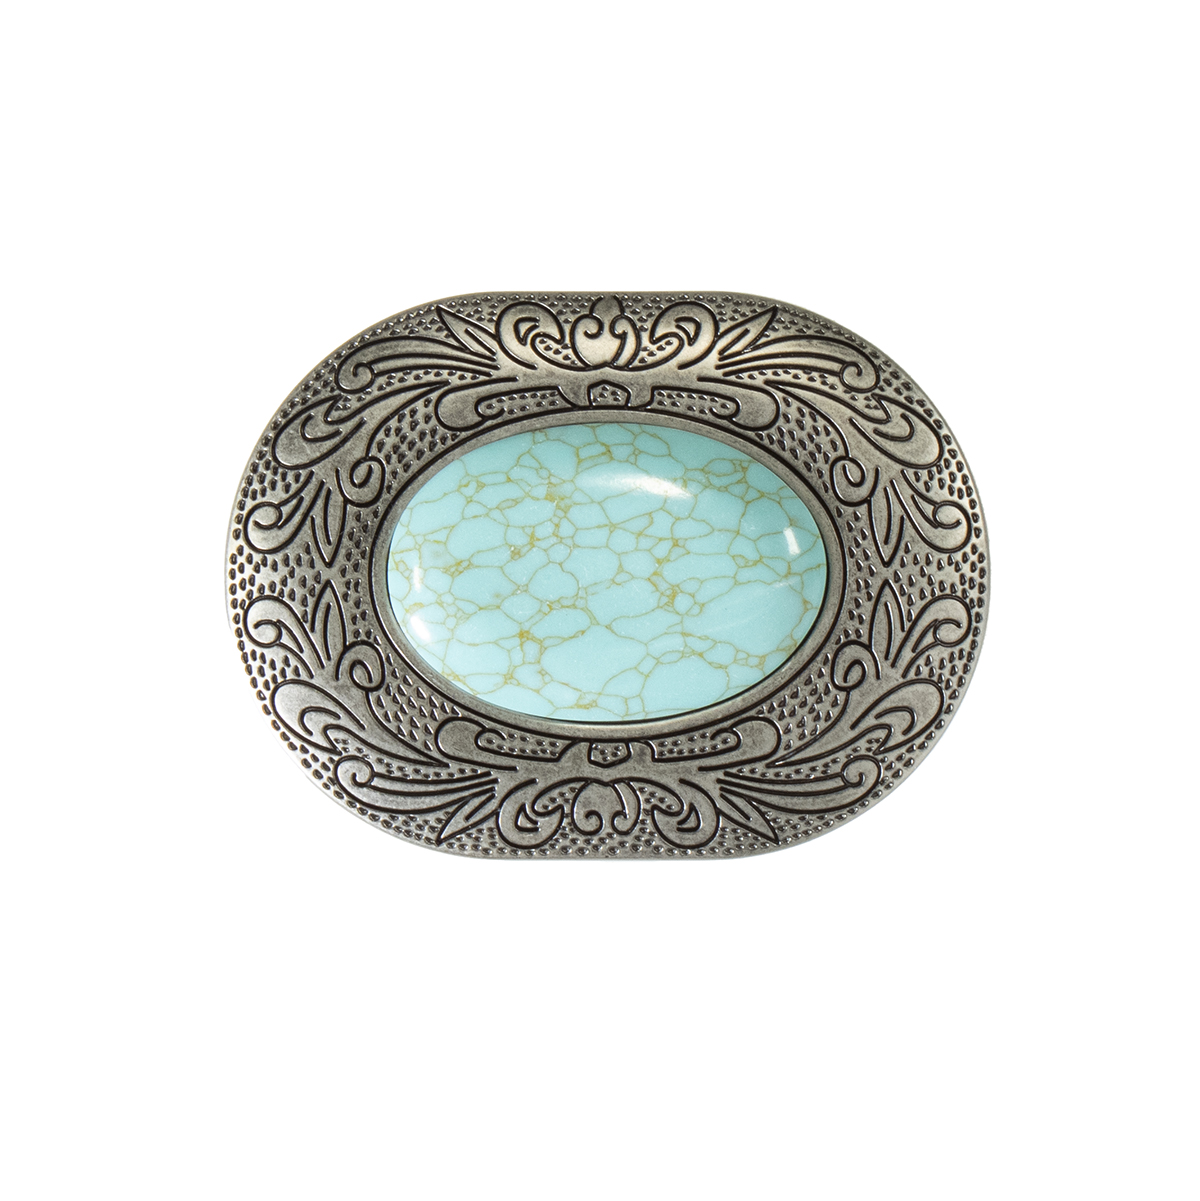 Blazin Roxx Women's Oval Turquoise Stone Buckle - Antique Silver